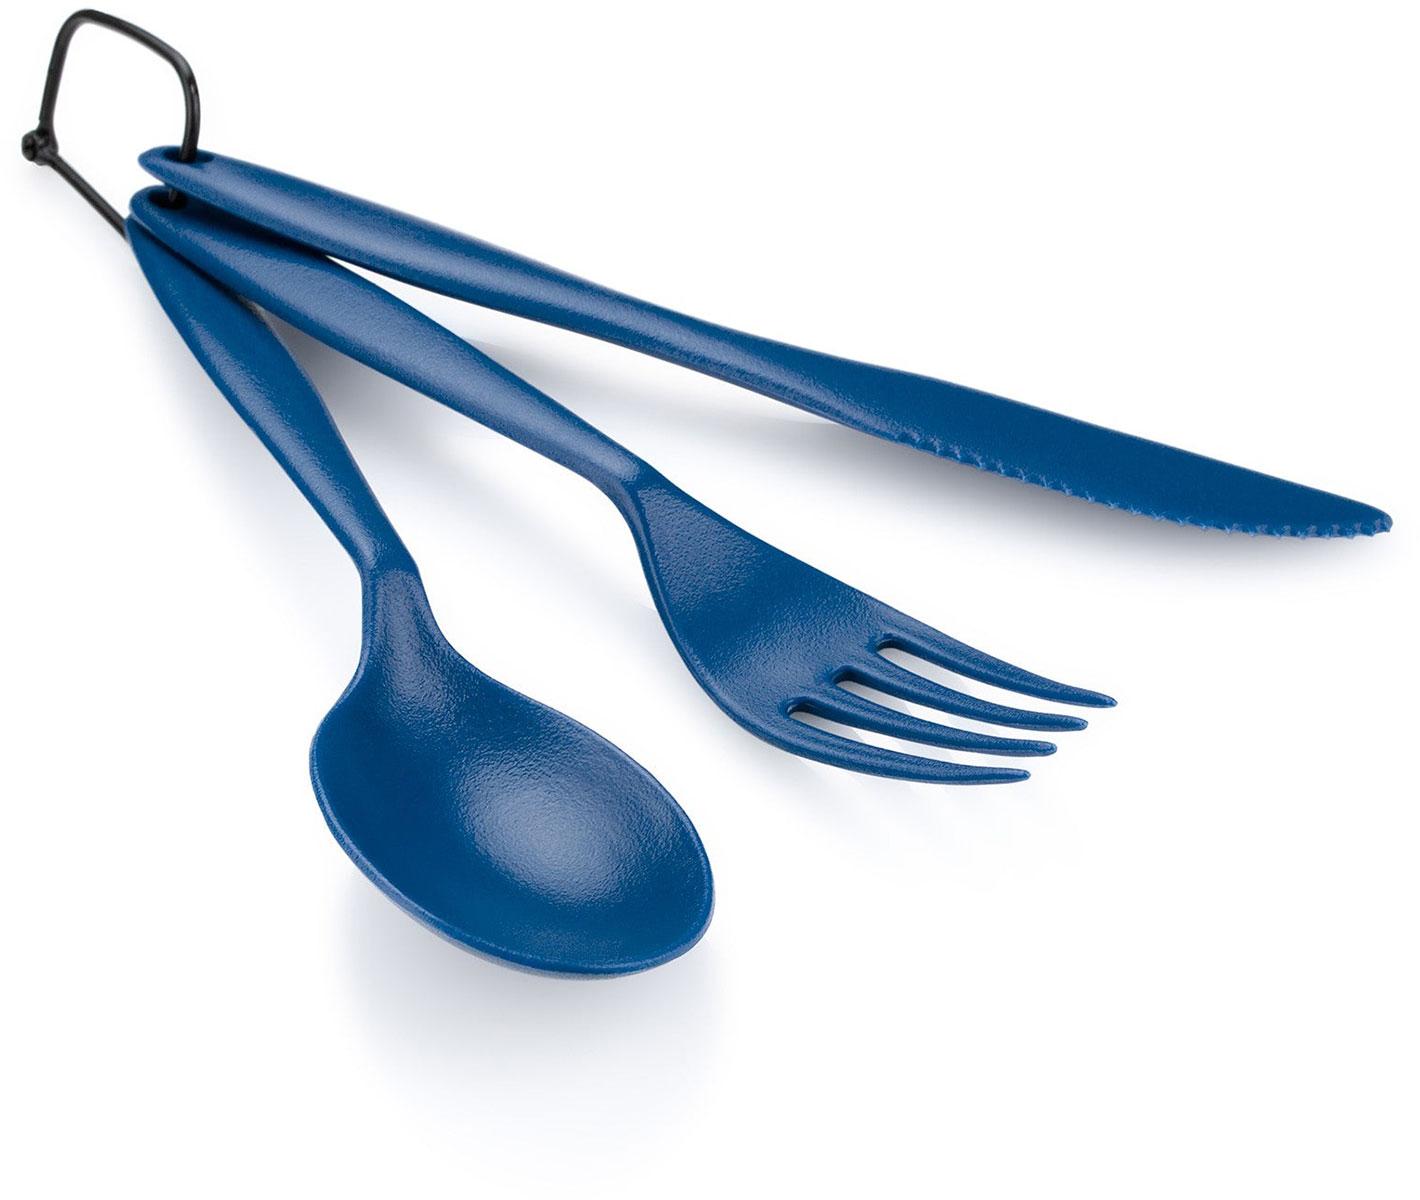 Gsi Outdoors Tekk Cutlery Set - Blue